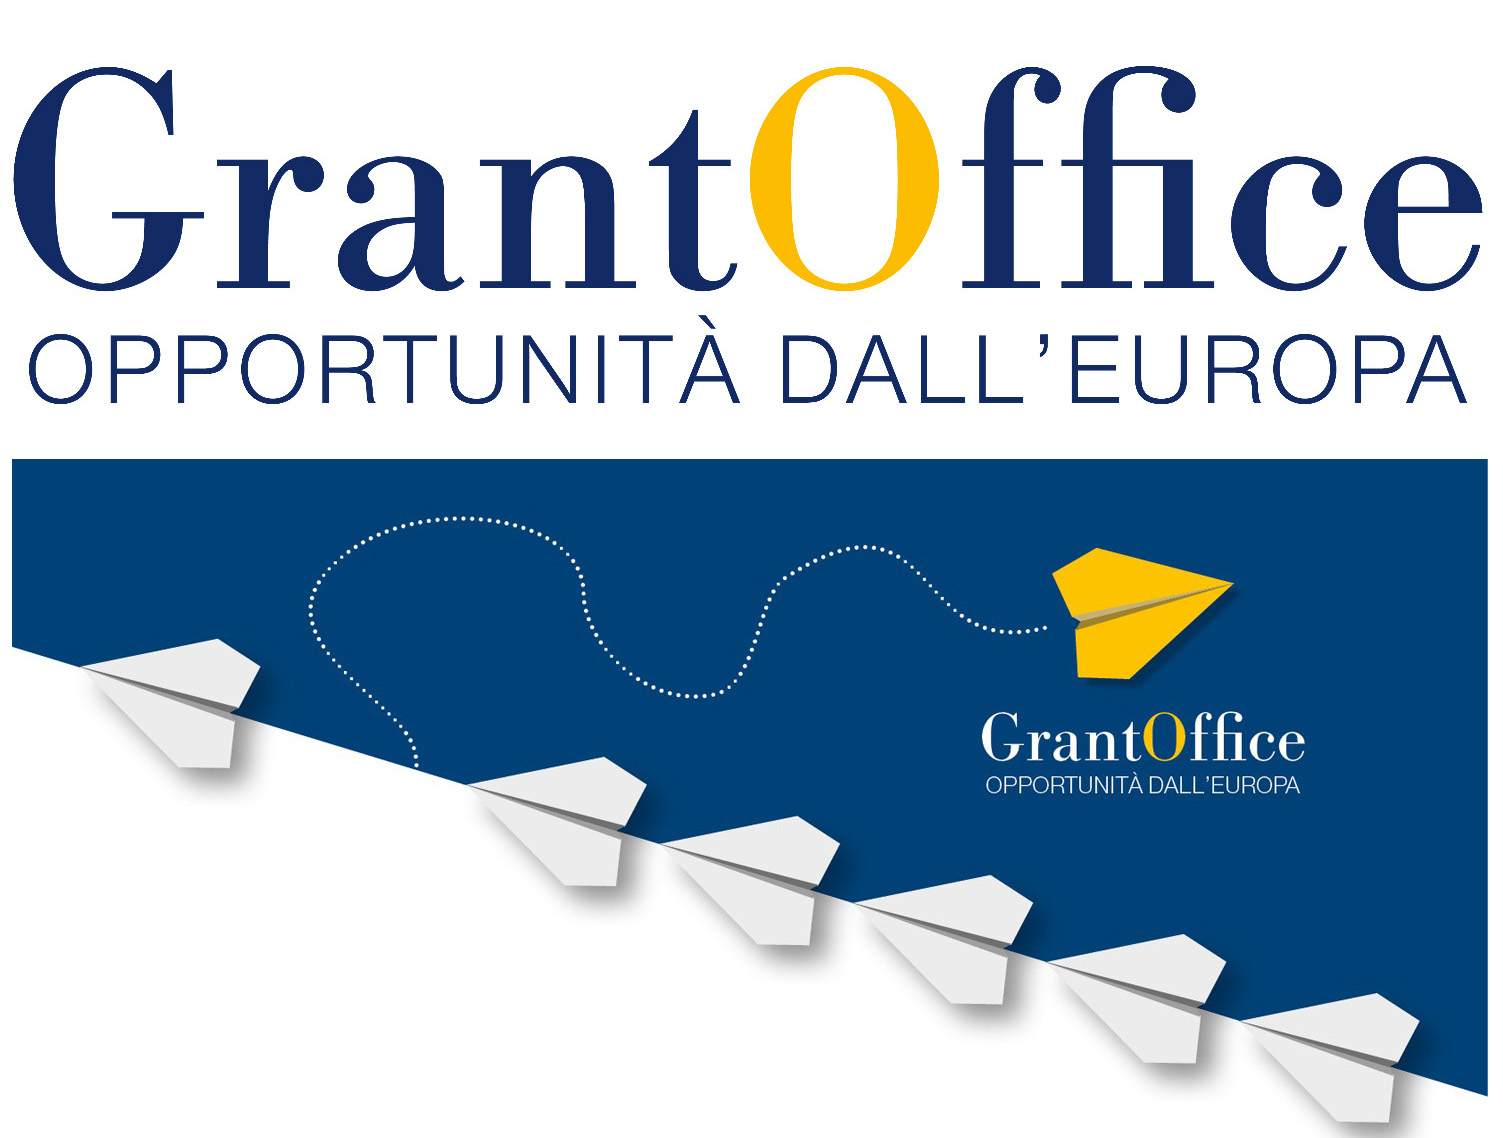 Grant Office